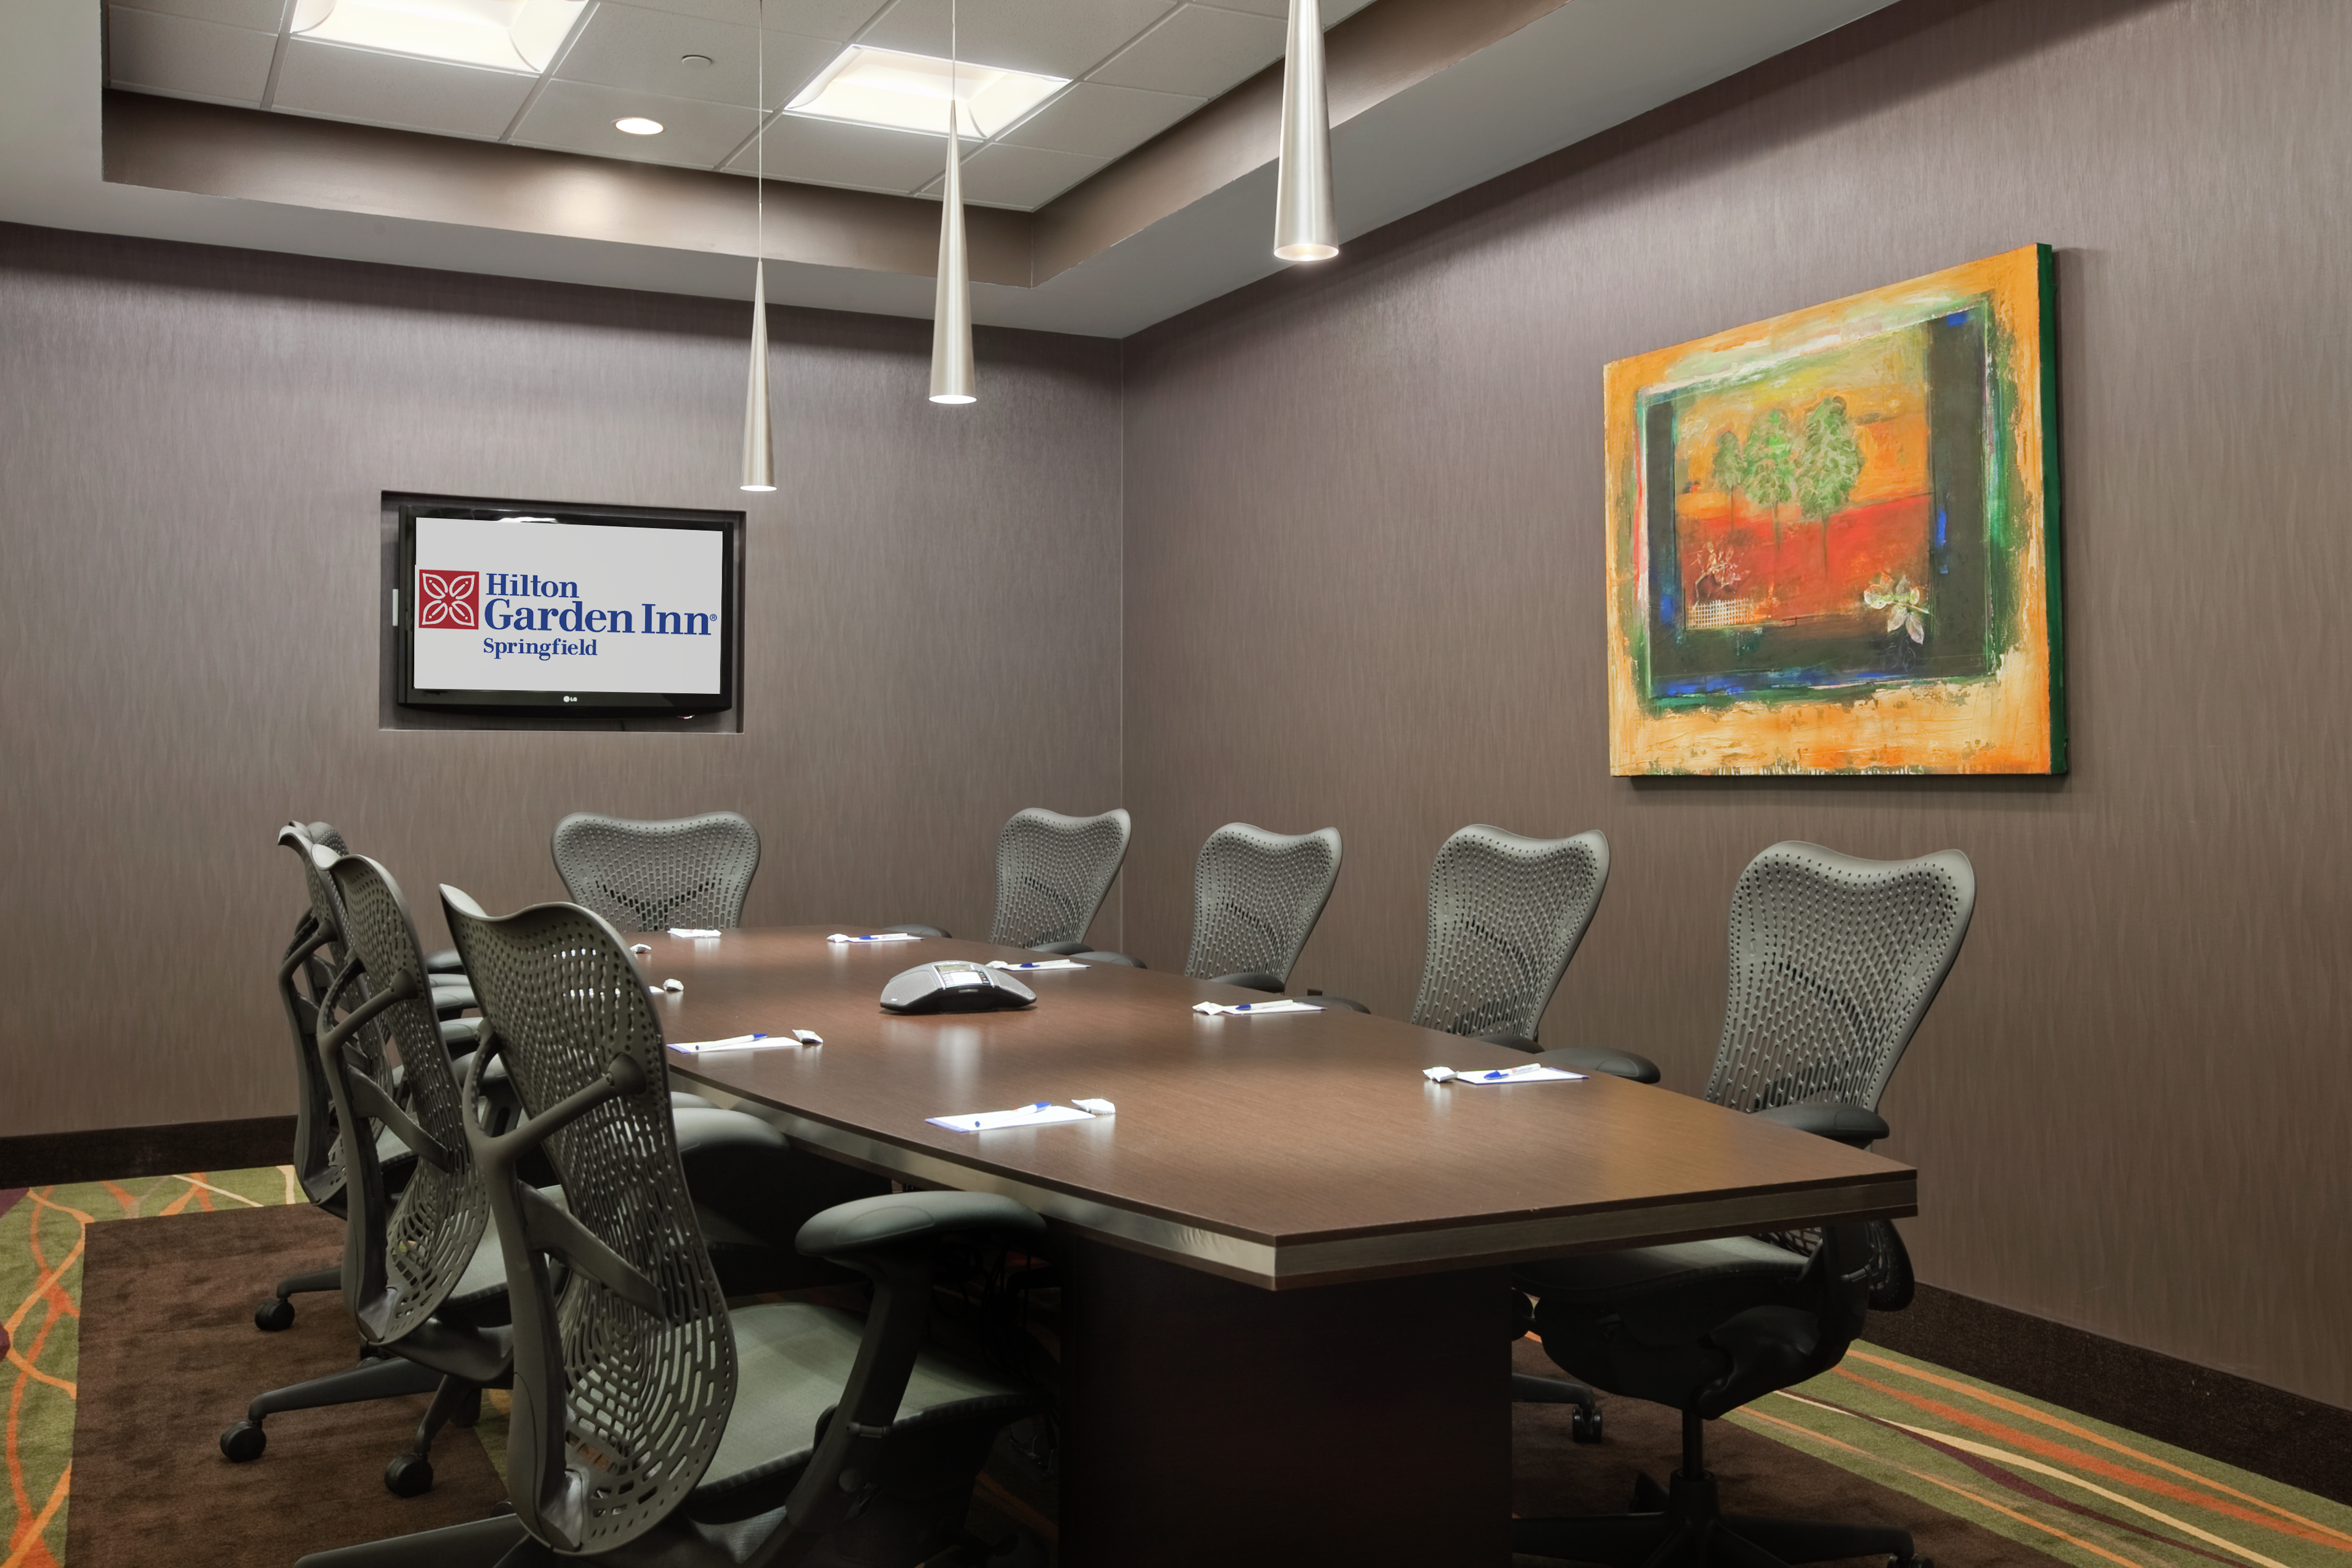 Boardroom Meeting Room